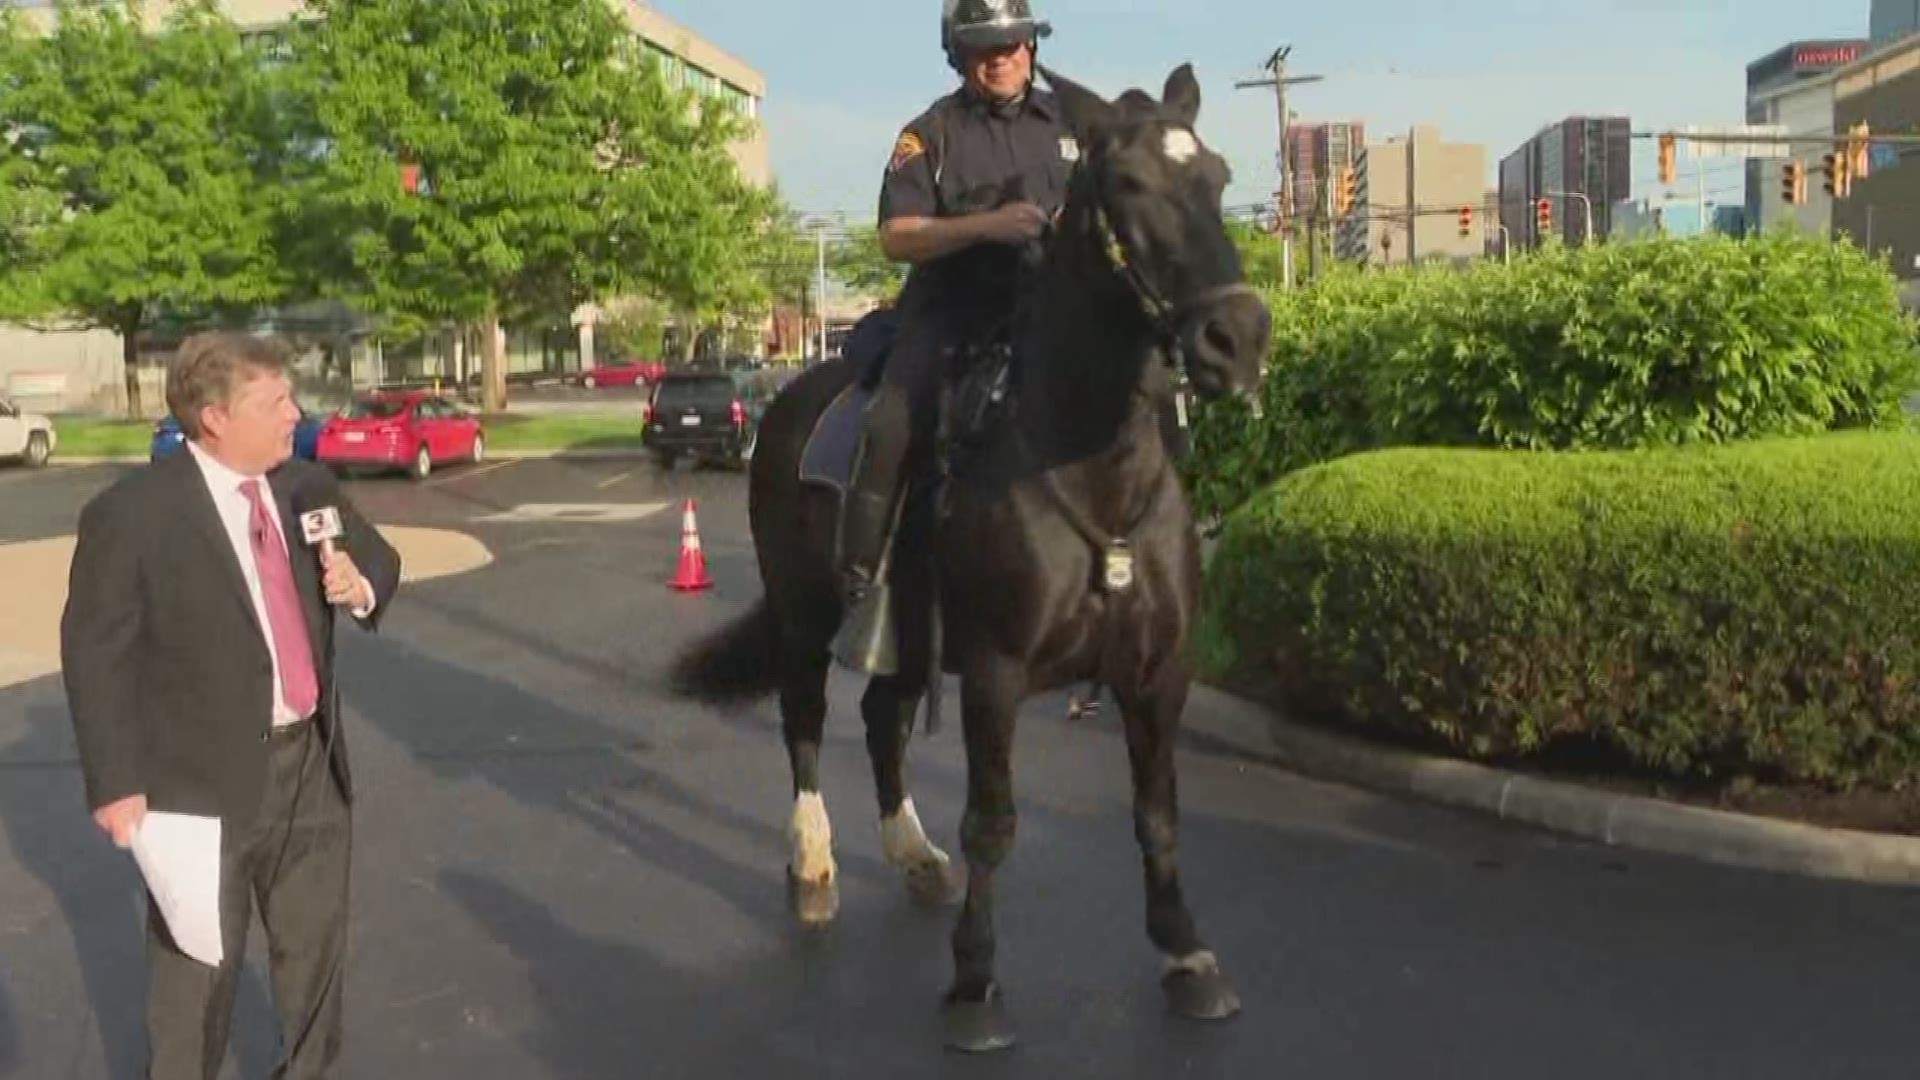 Dancing Cleveland Police horse makes visit to Donovan Live